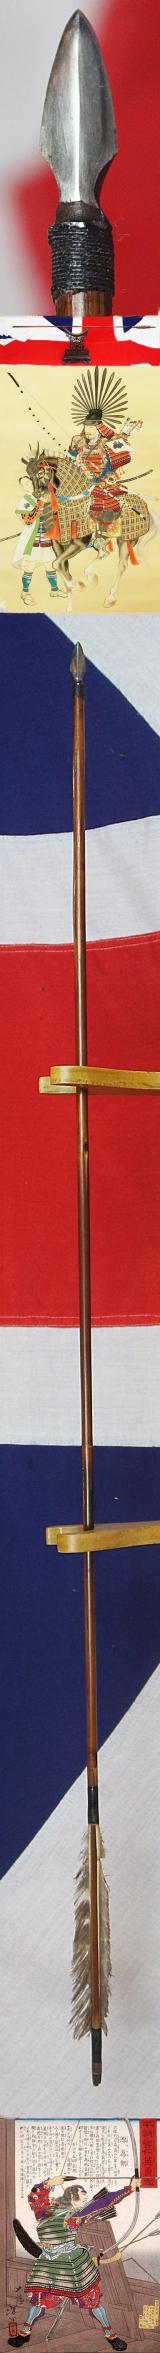 An Original Edo Period, 1598 to 1873, Samurai Bowman's War Arrow {Tagari Ya} With Forged Steel Head, Sea Eagle Feathers, and Yadake Bamboo Haft